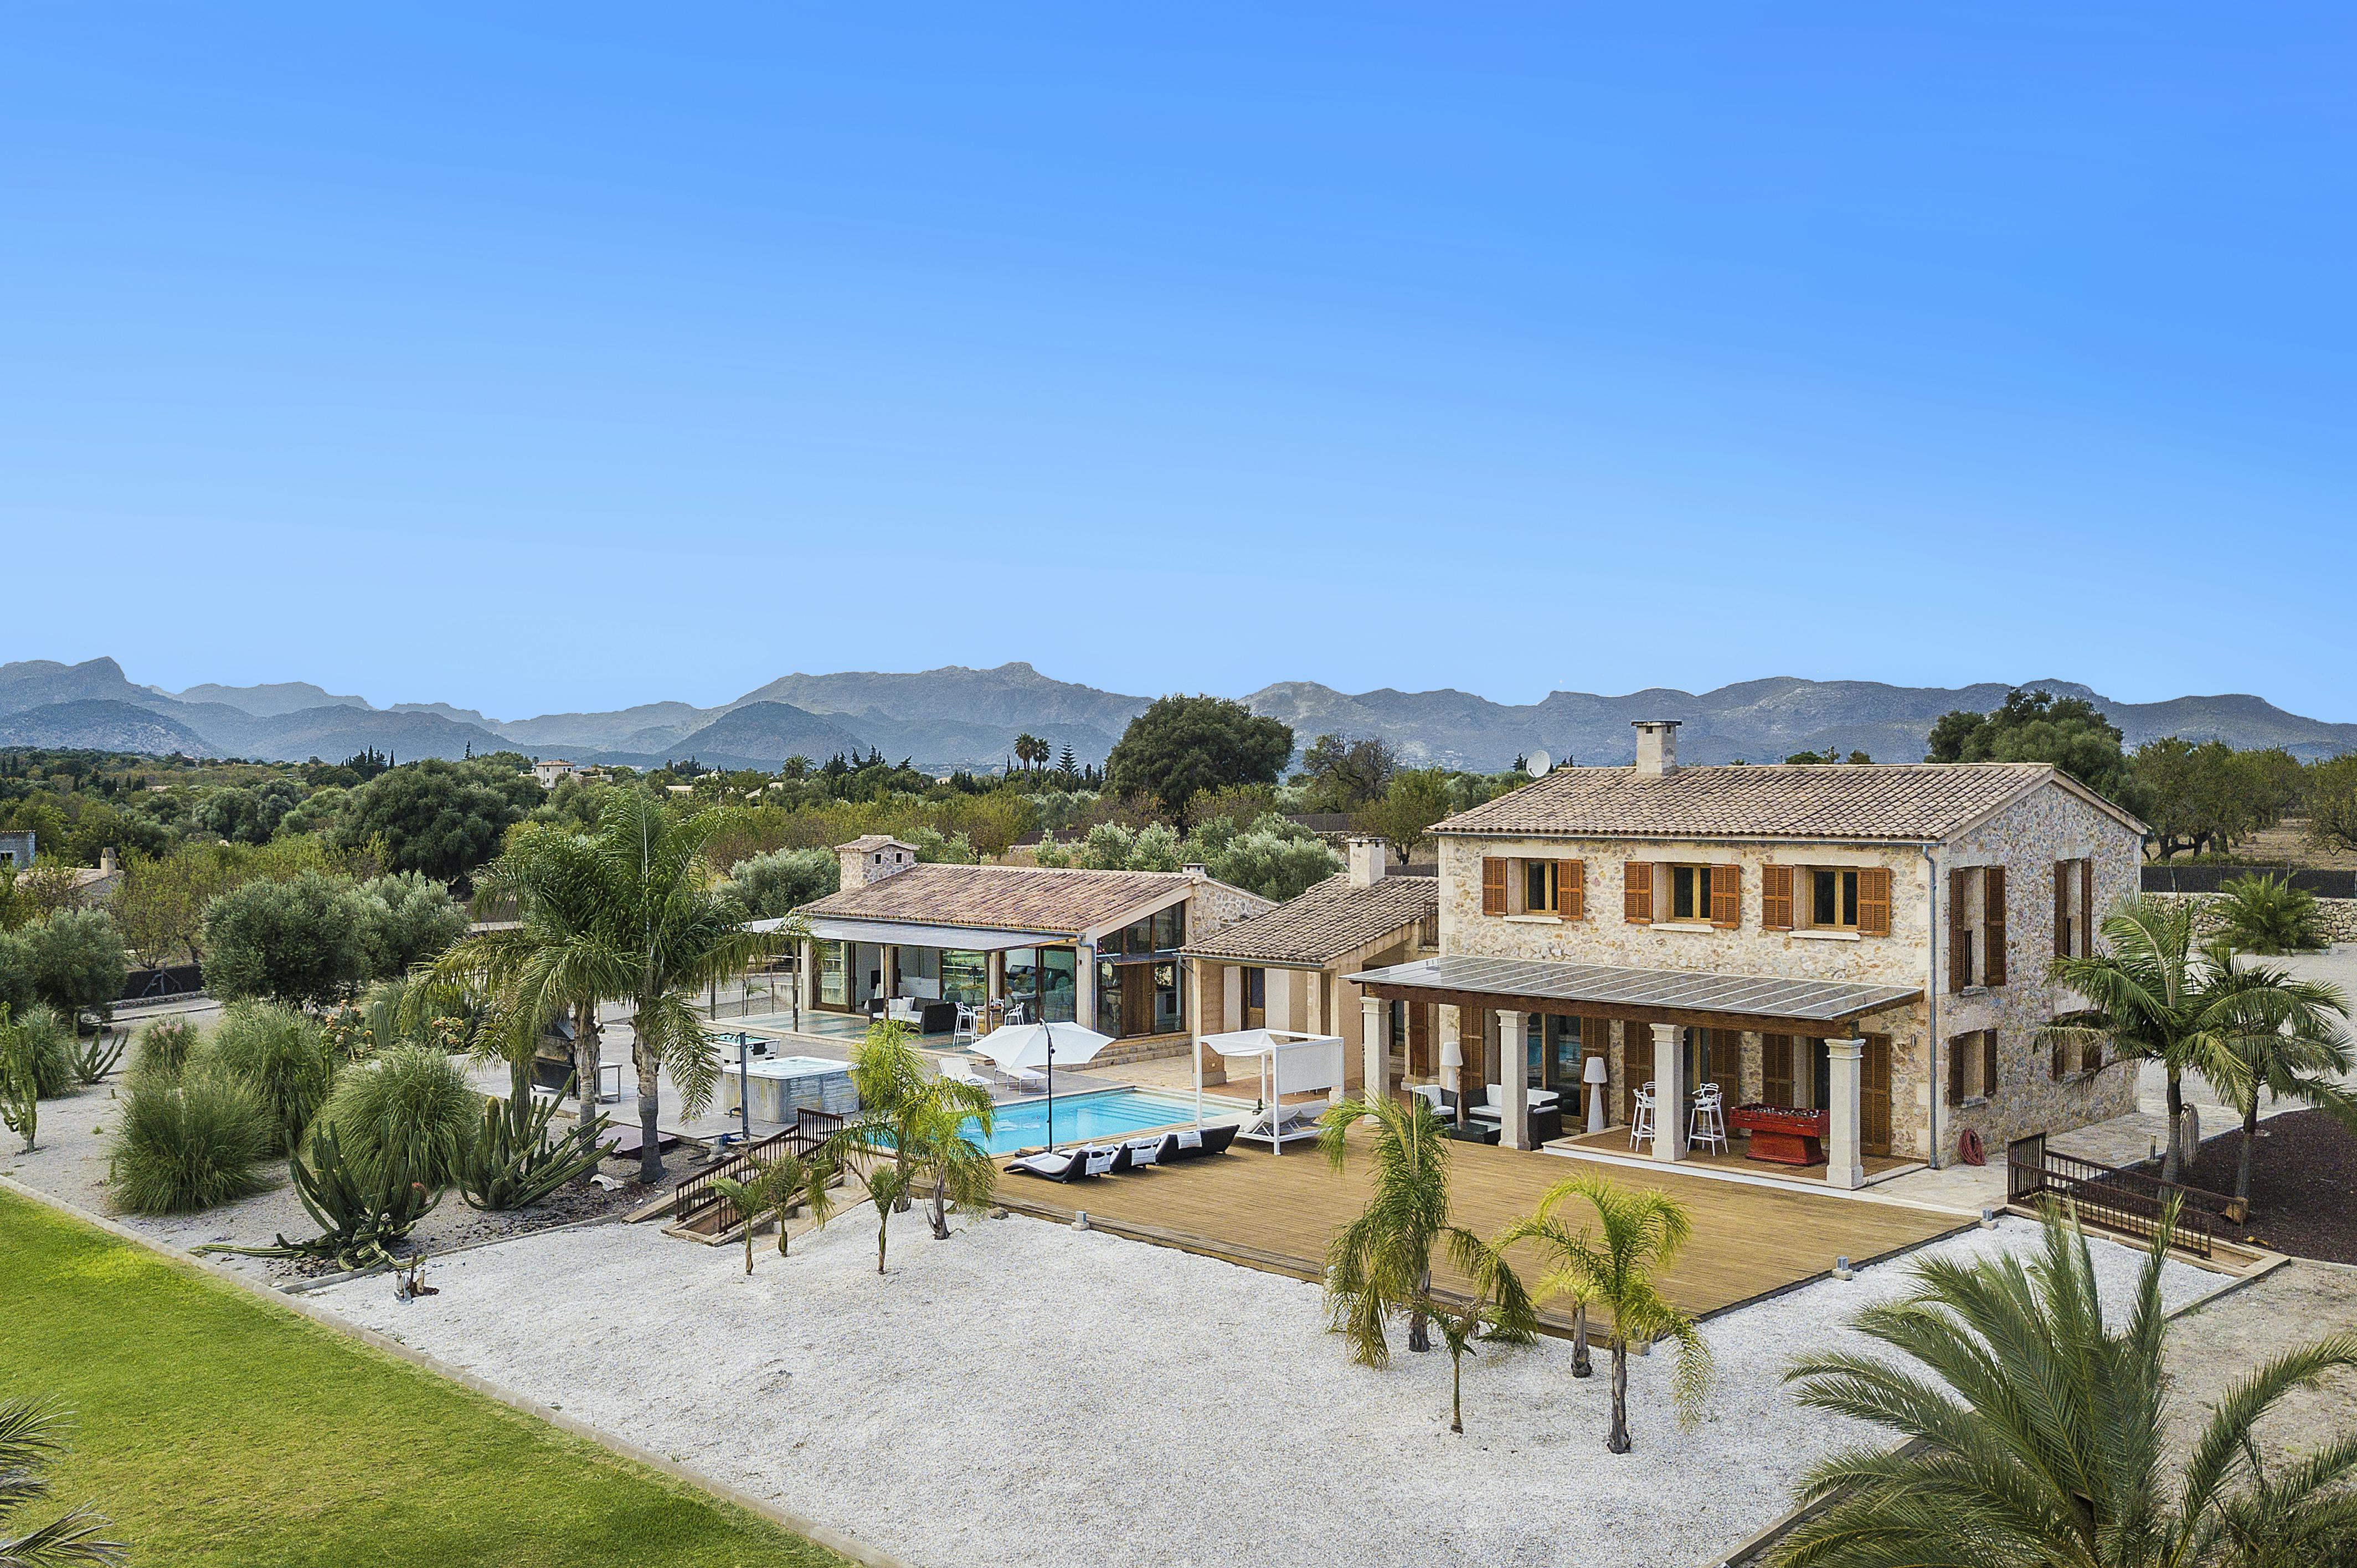 How properly rent villa Mallorca - Villa Oliva